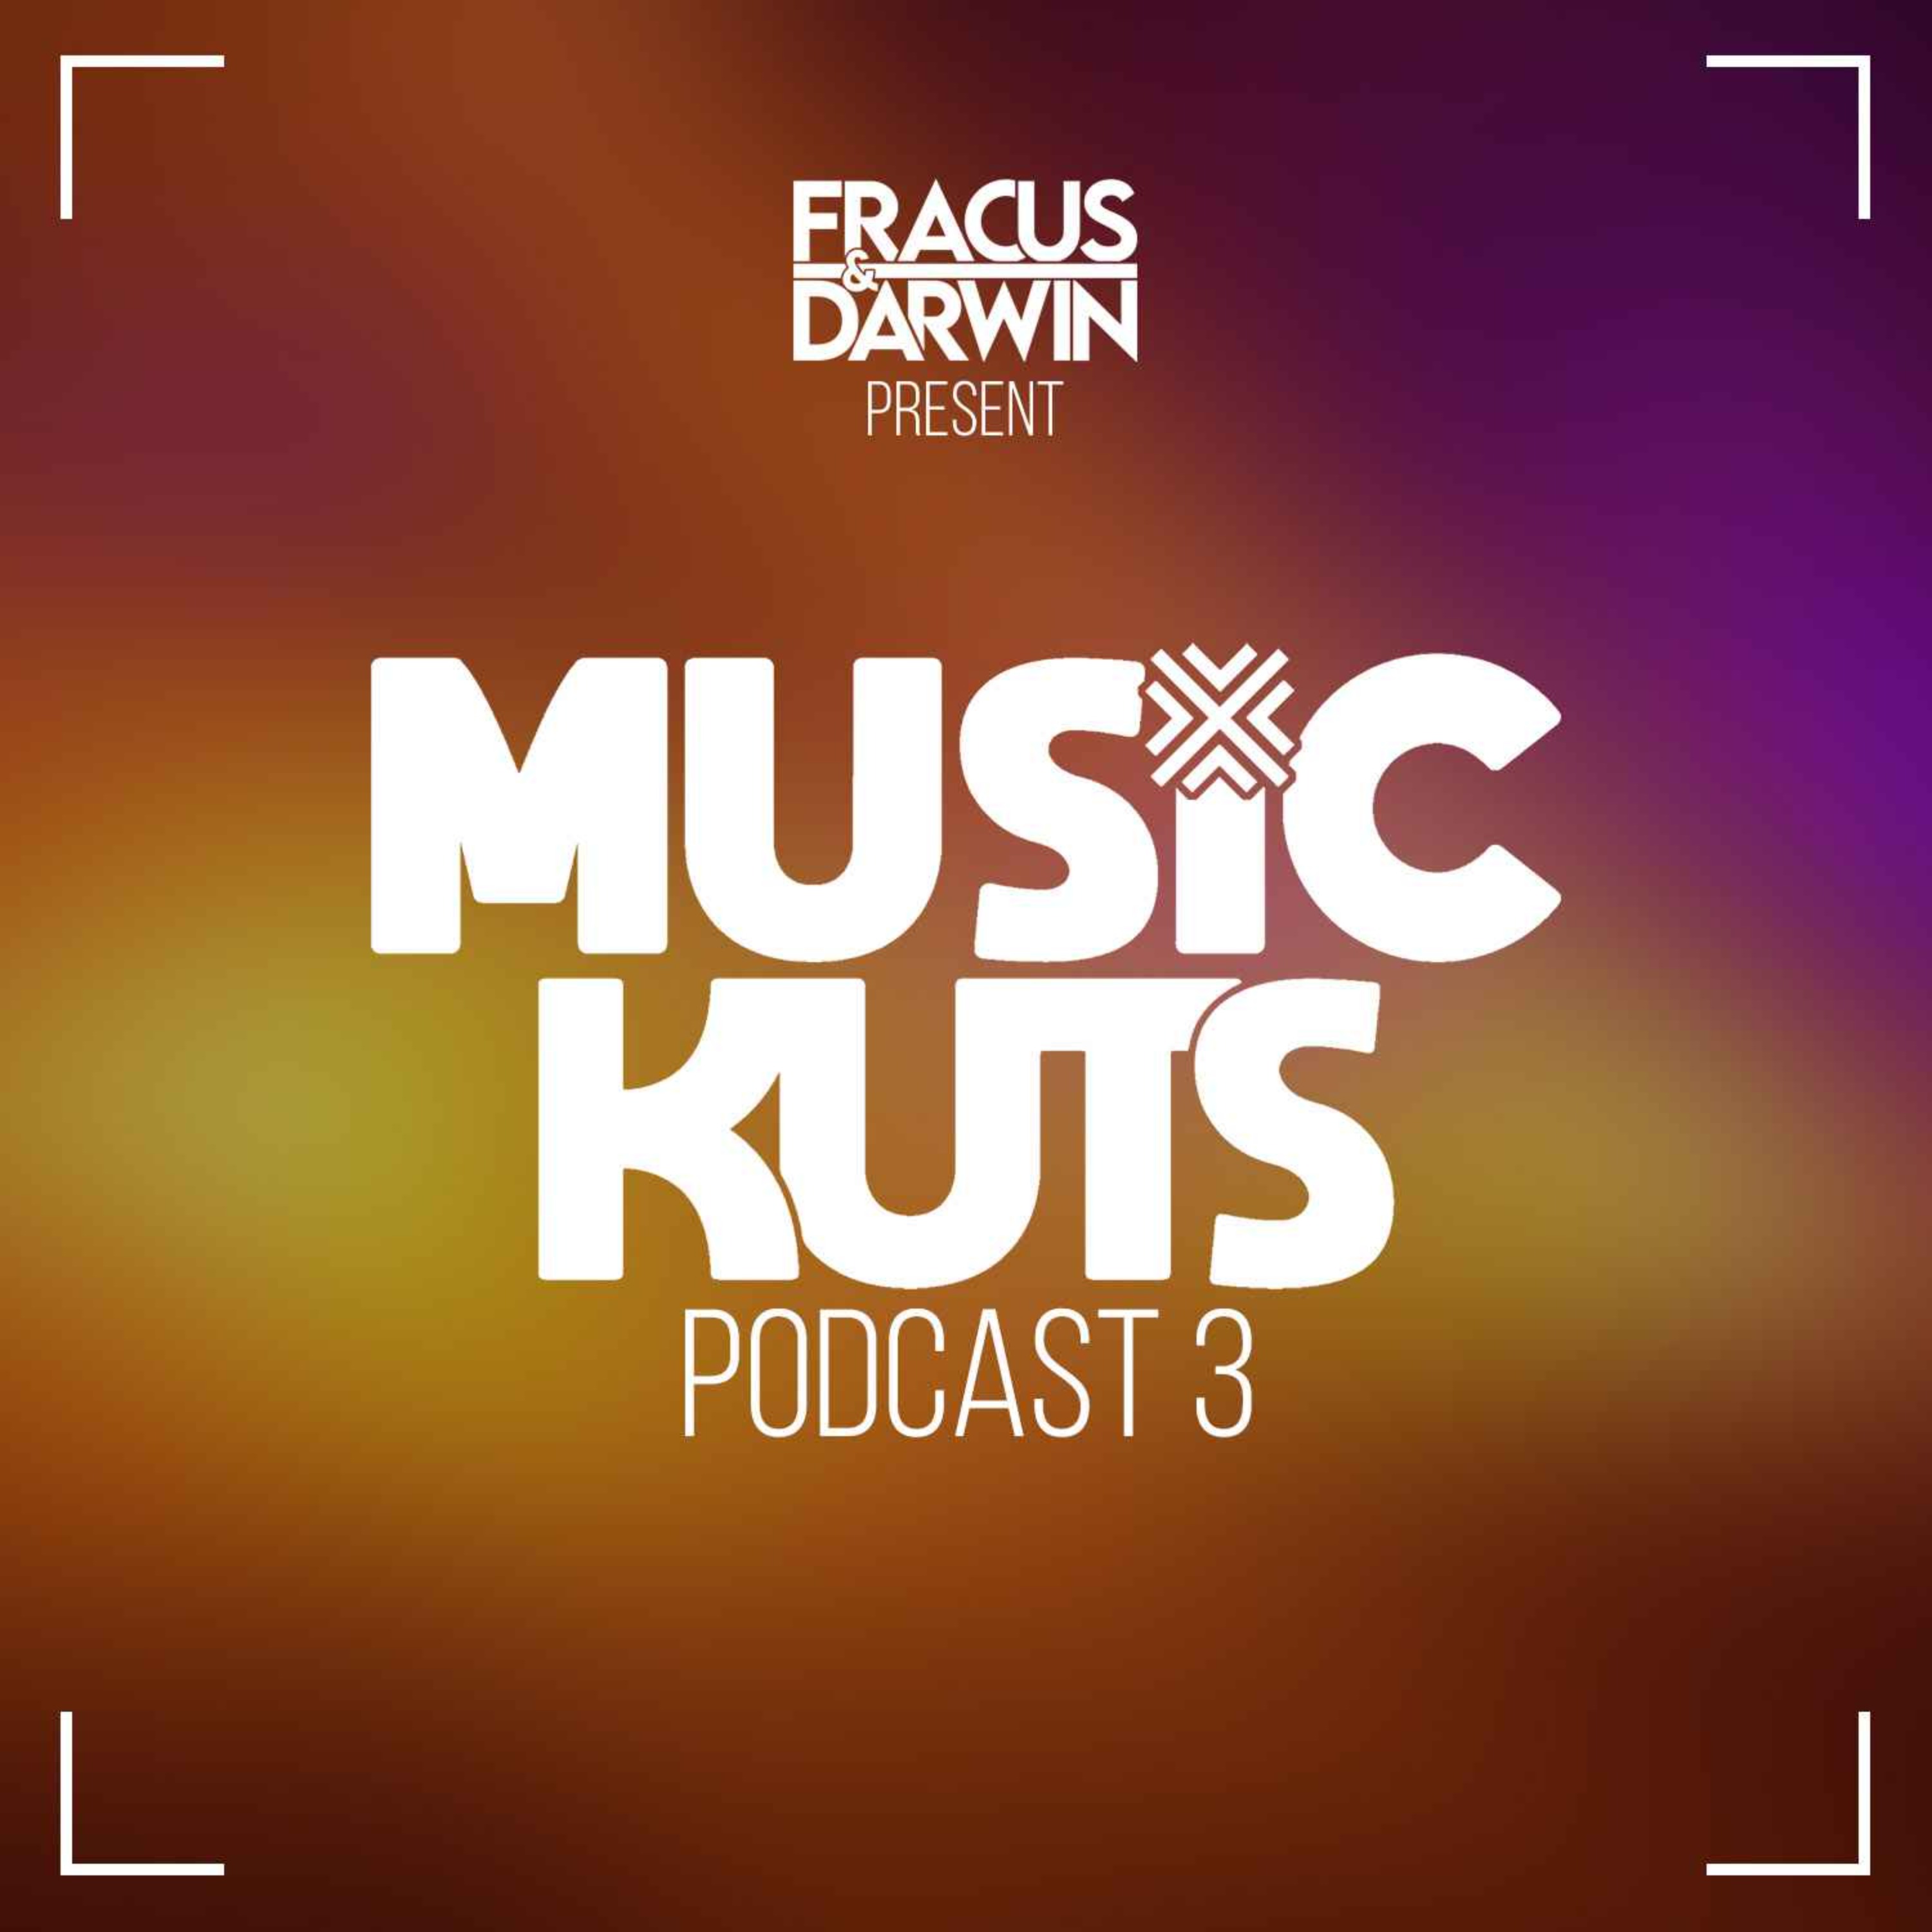 Music Kuts Podcast 3